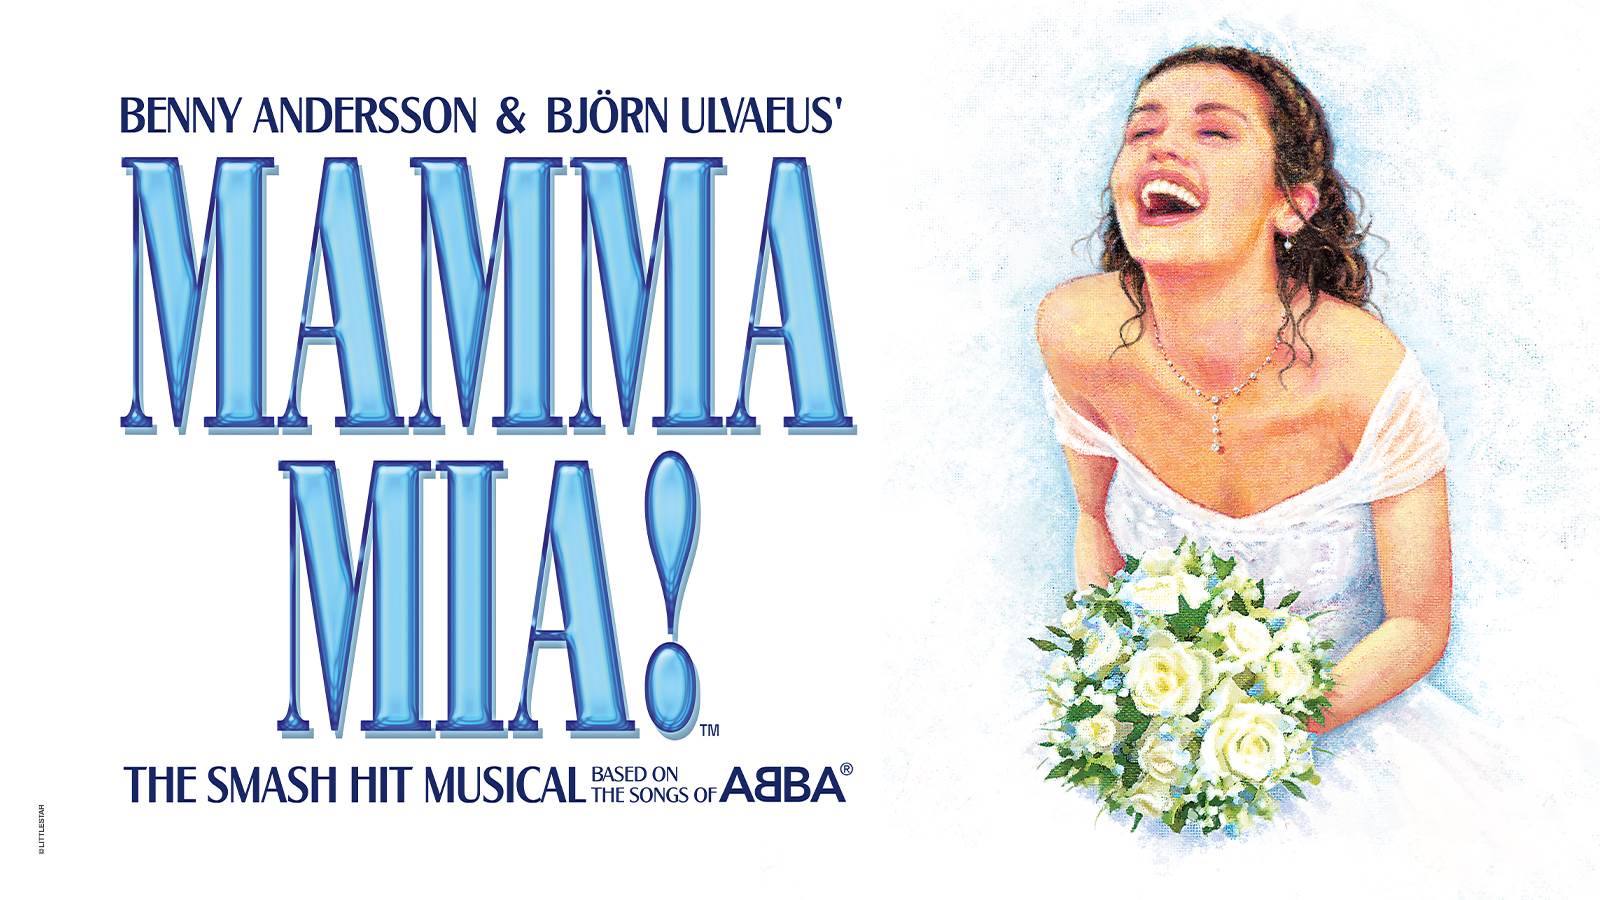 Mamma Mia 2 cast - Amanda Seyfried, Dominic Cooper, Pierce Brosnan, Colin  Firth, Julie Walters, Cher and Christine Baranski star in sequel Here We Go  Again